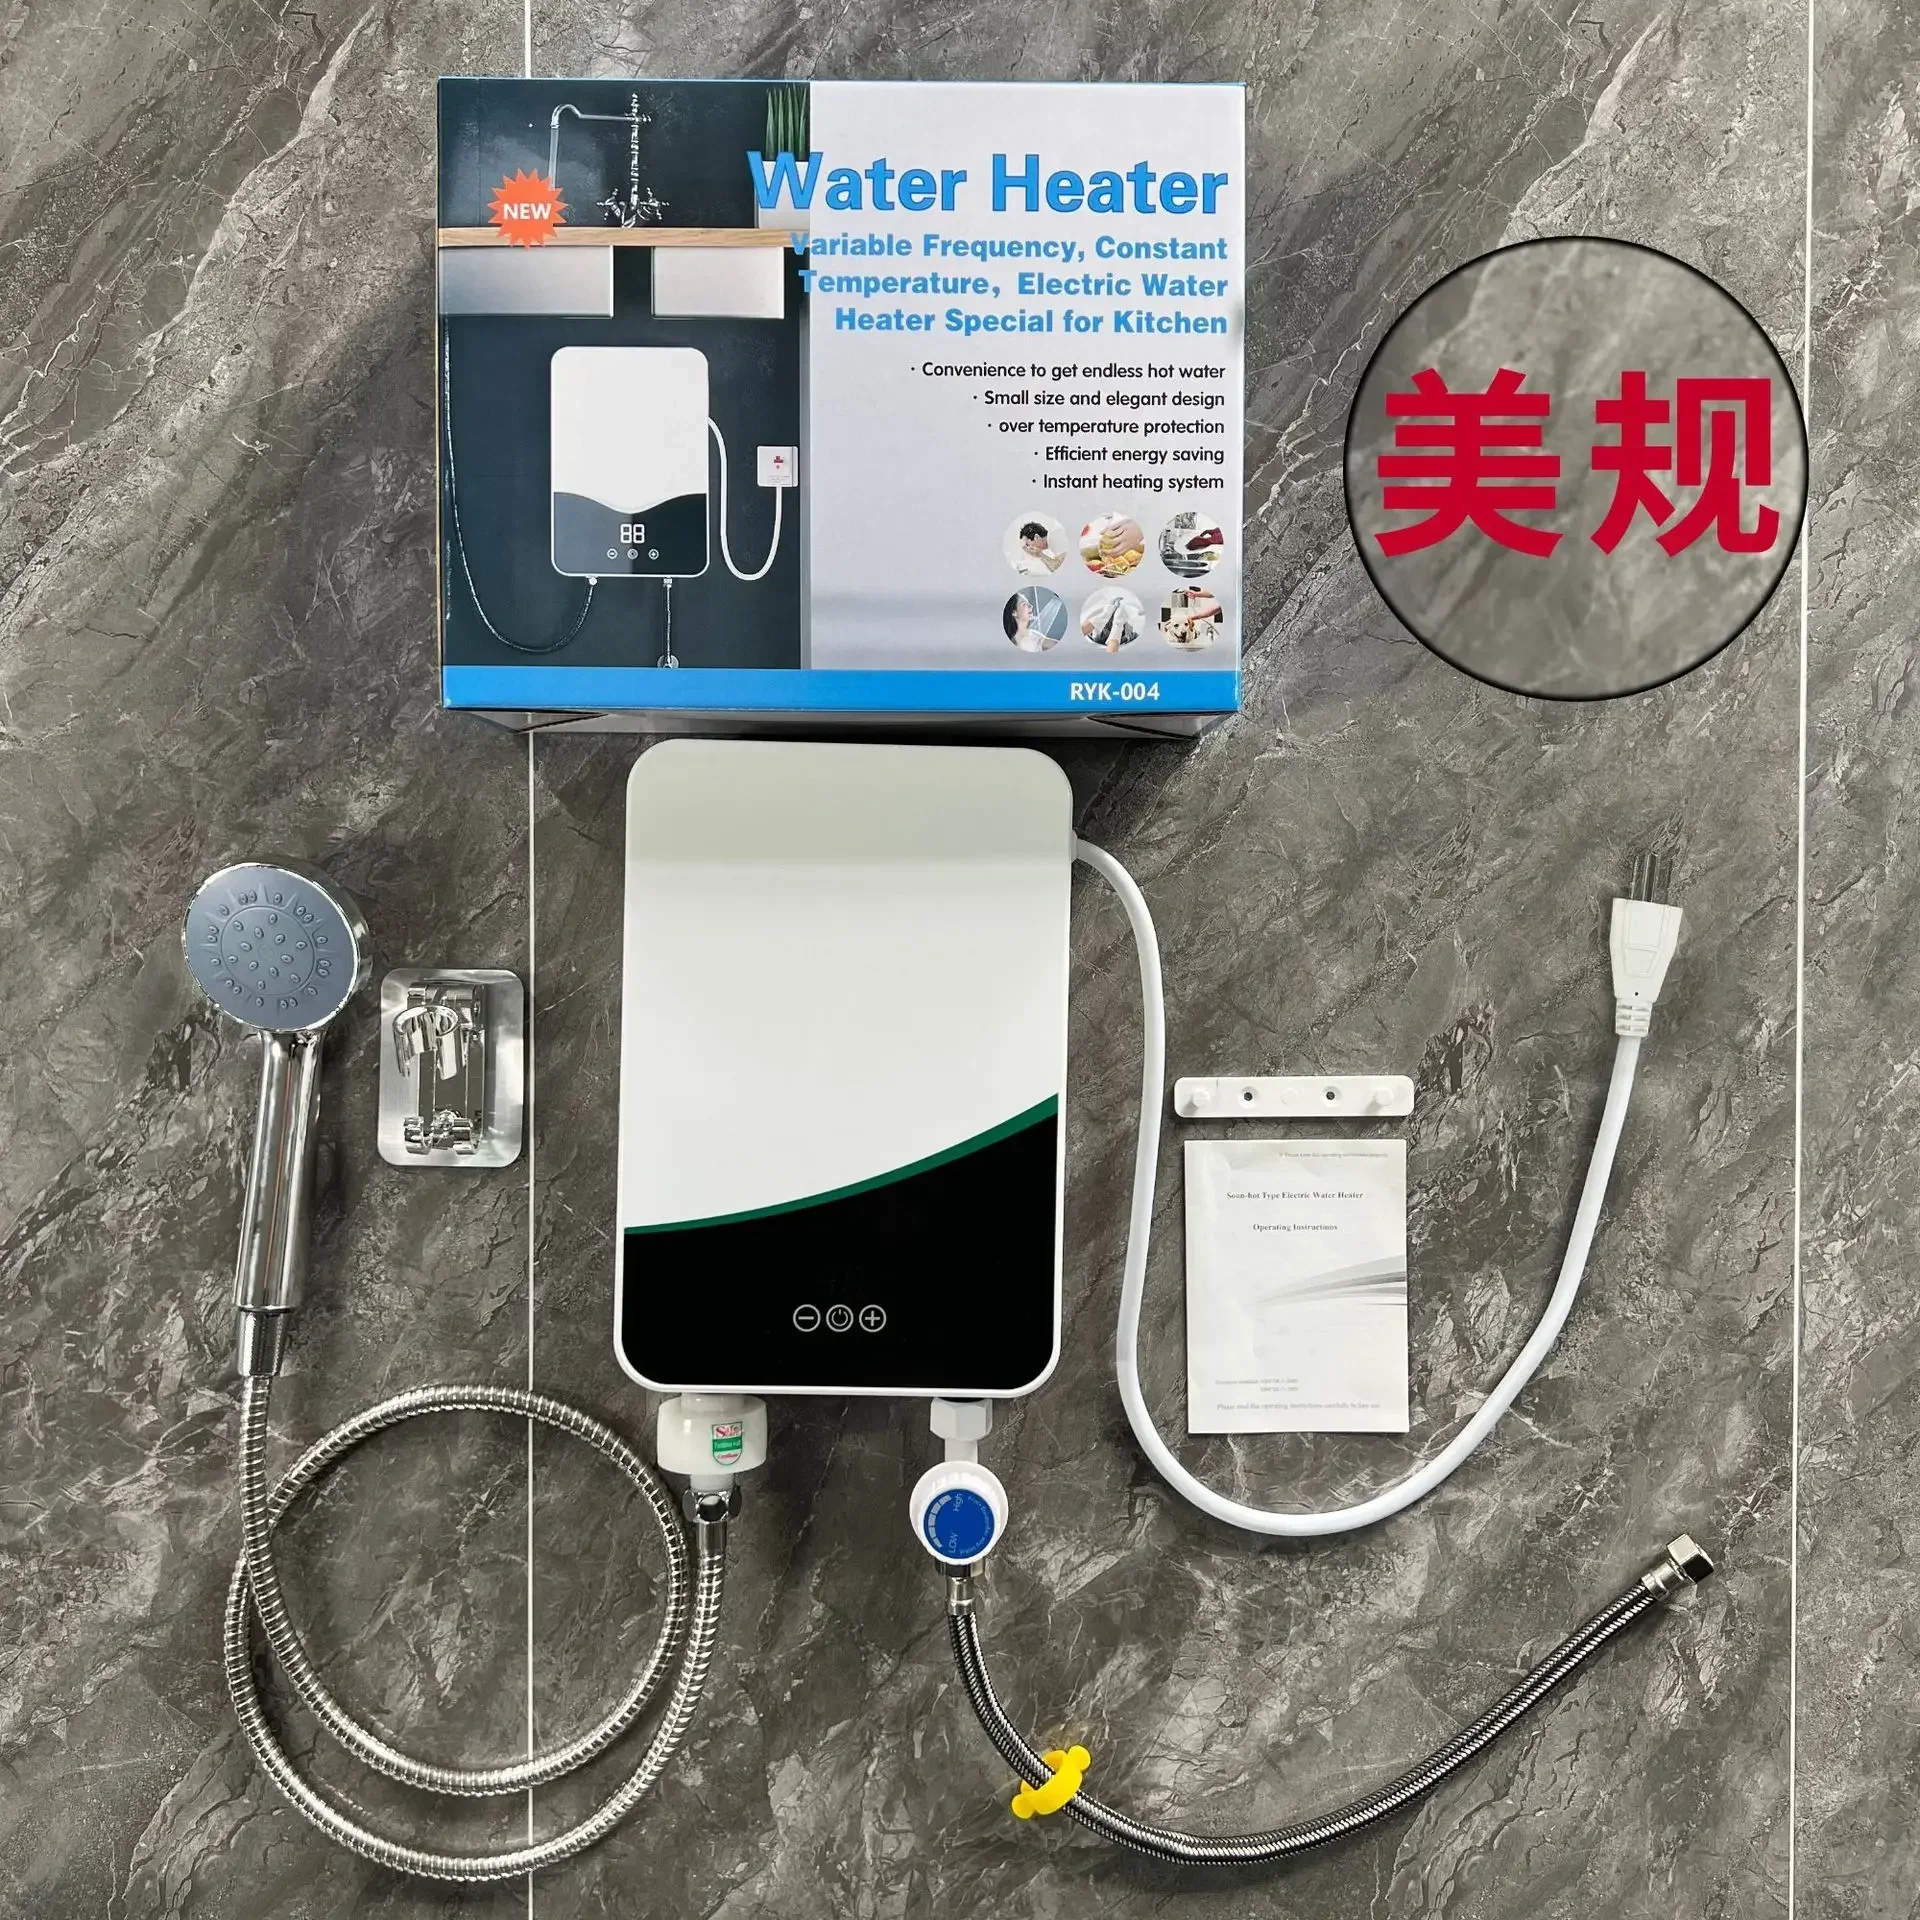 Instant електрически бойлер без резервоар, интелигентен бойлер самомодулиращ се без загуби в режим на готовност, домакински душ гореща вода . ' - ' . 4